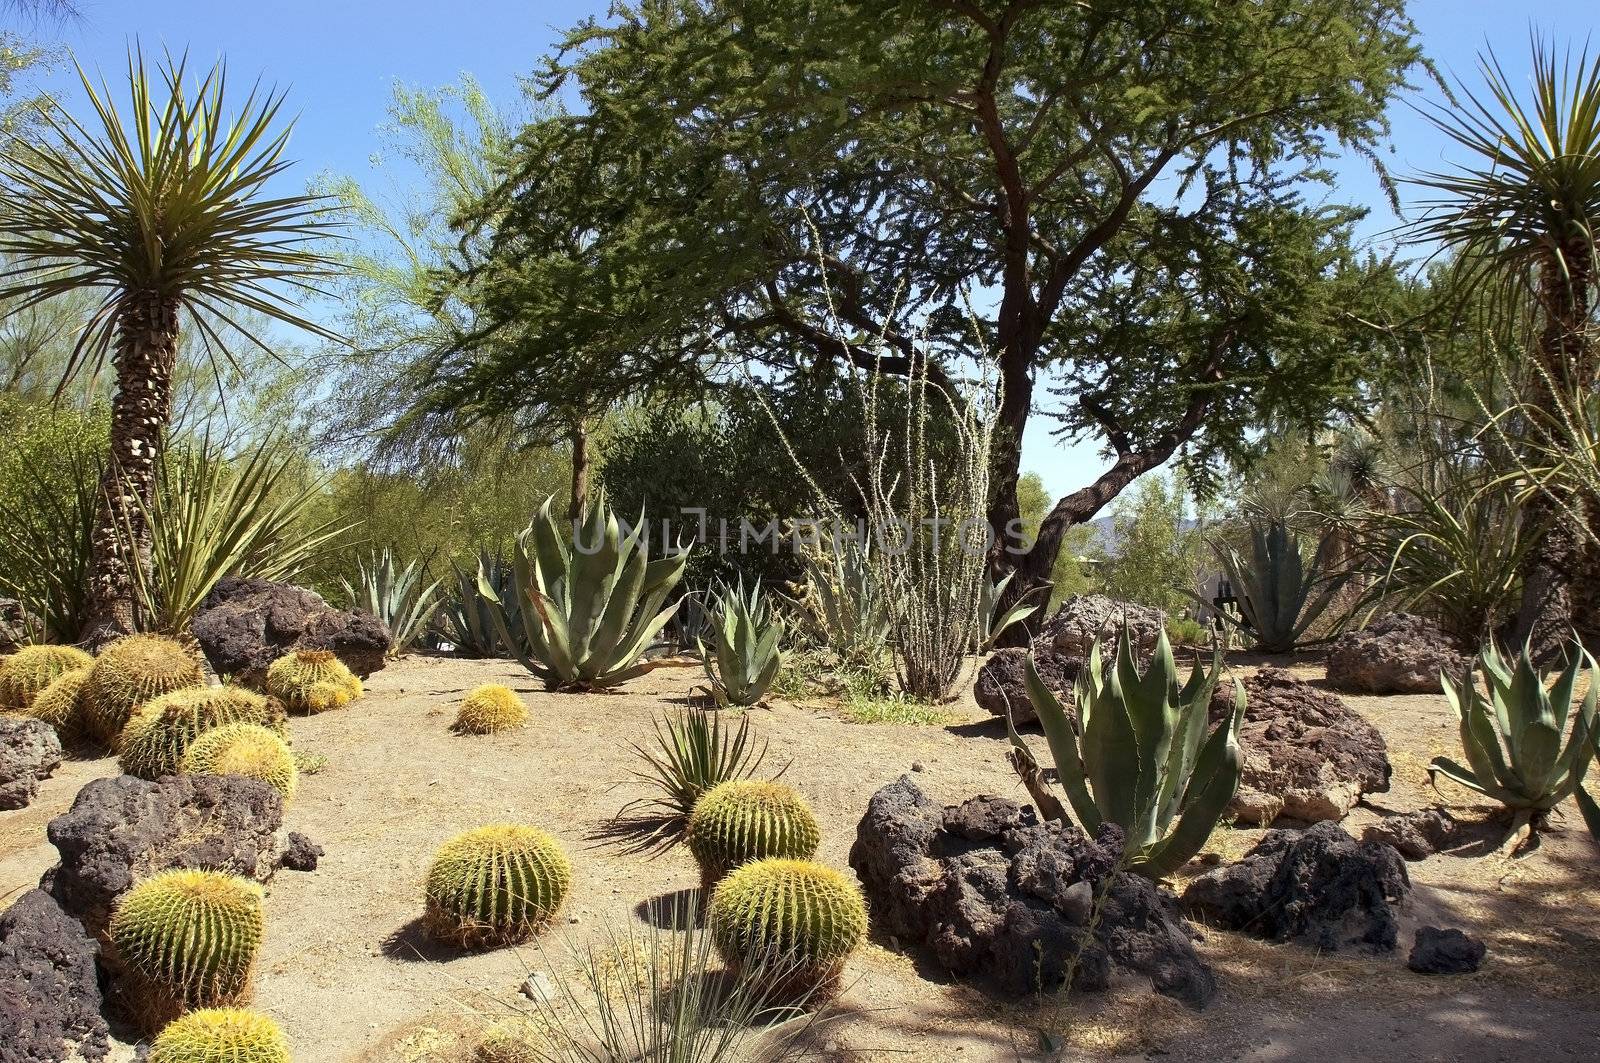 cactuses in desert of Nevada, USA by irisphoto4